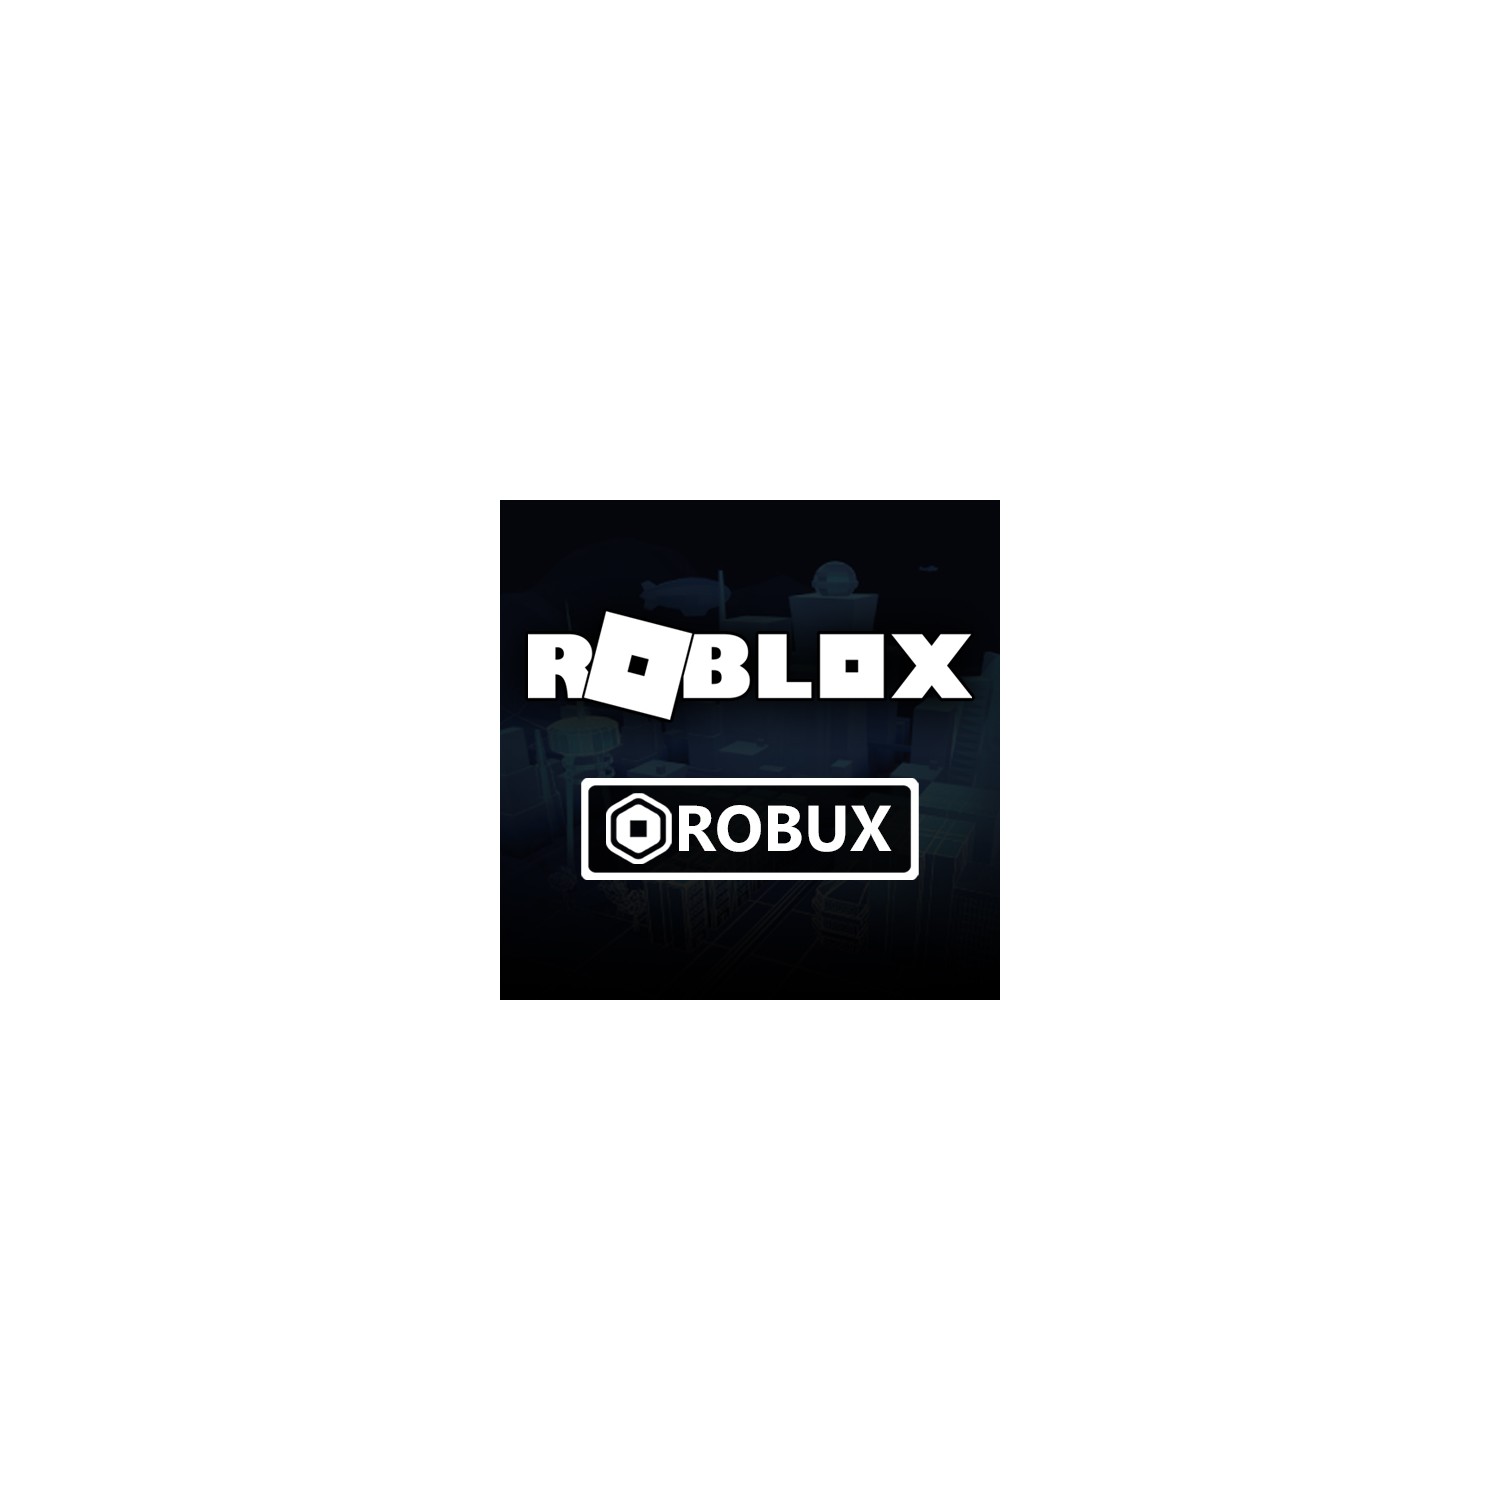 Roblox 800 Robux Fiyati Taksit Secenekleri Ile Satin Al - ucuz robux alma